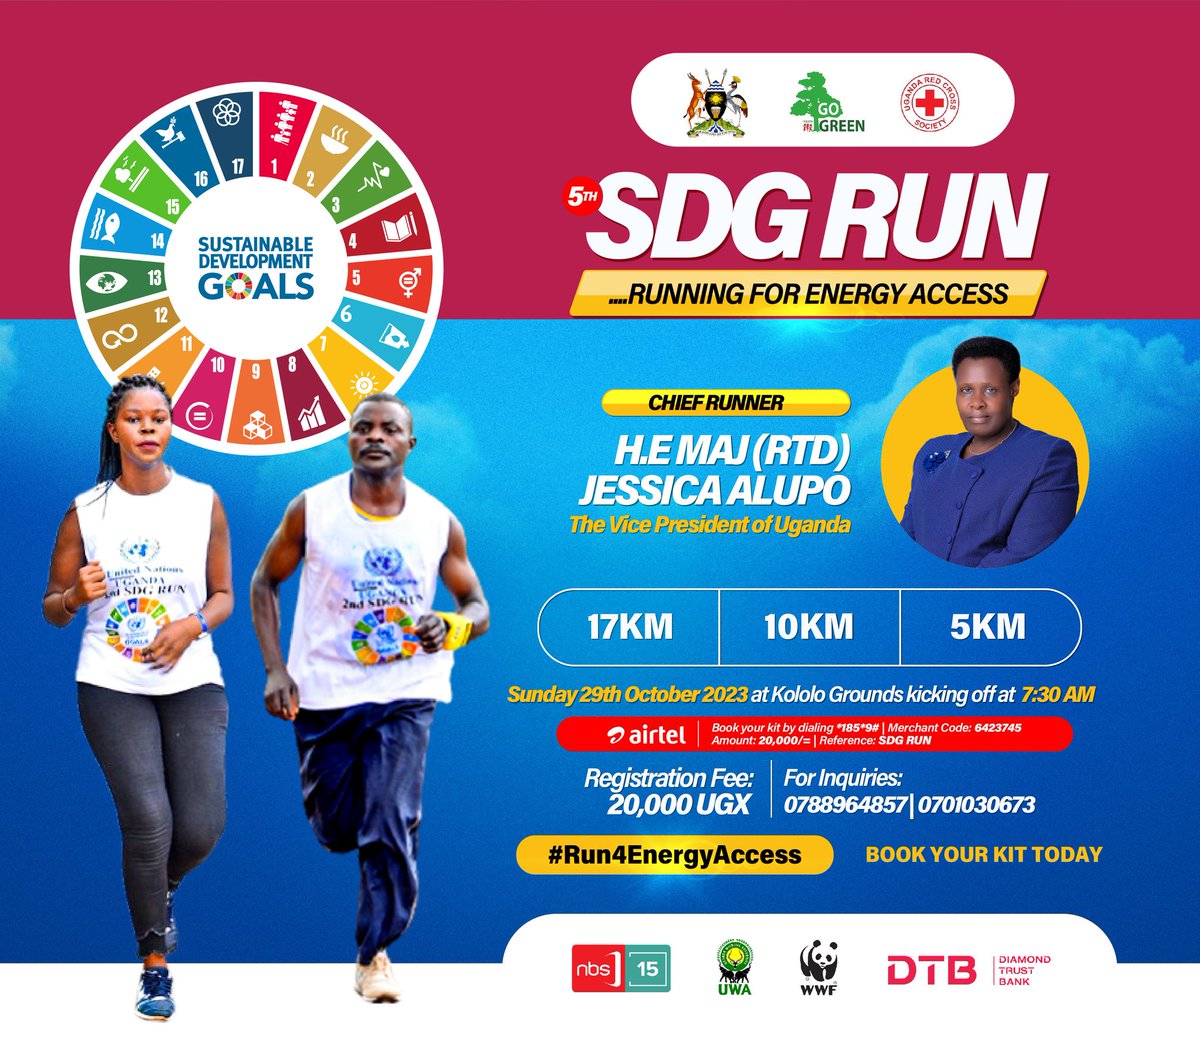 It's back again, I will be running for #SDG13 Join us by booking your Kit 
#5thSDGRUN 
#Run4EnergyAccess 
#YouthRun4SDGs
@youthgogreen 
@nbstv
@RedCrossUganda